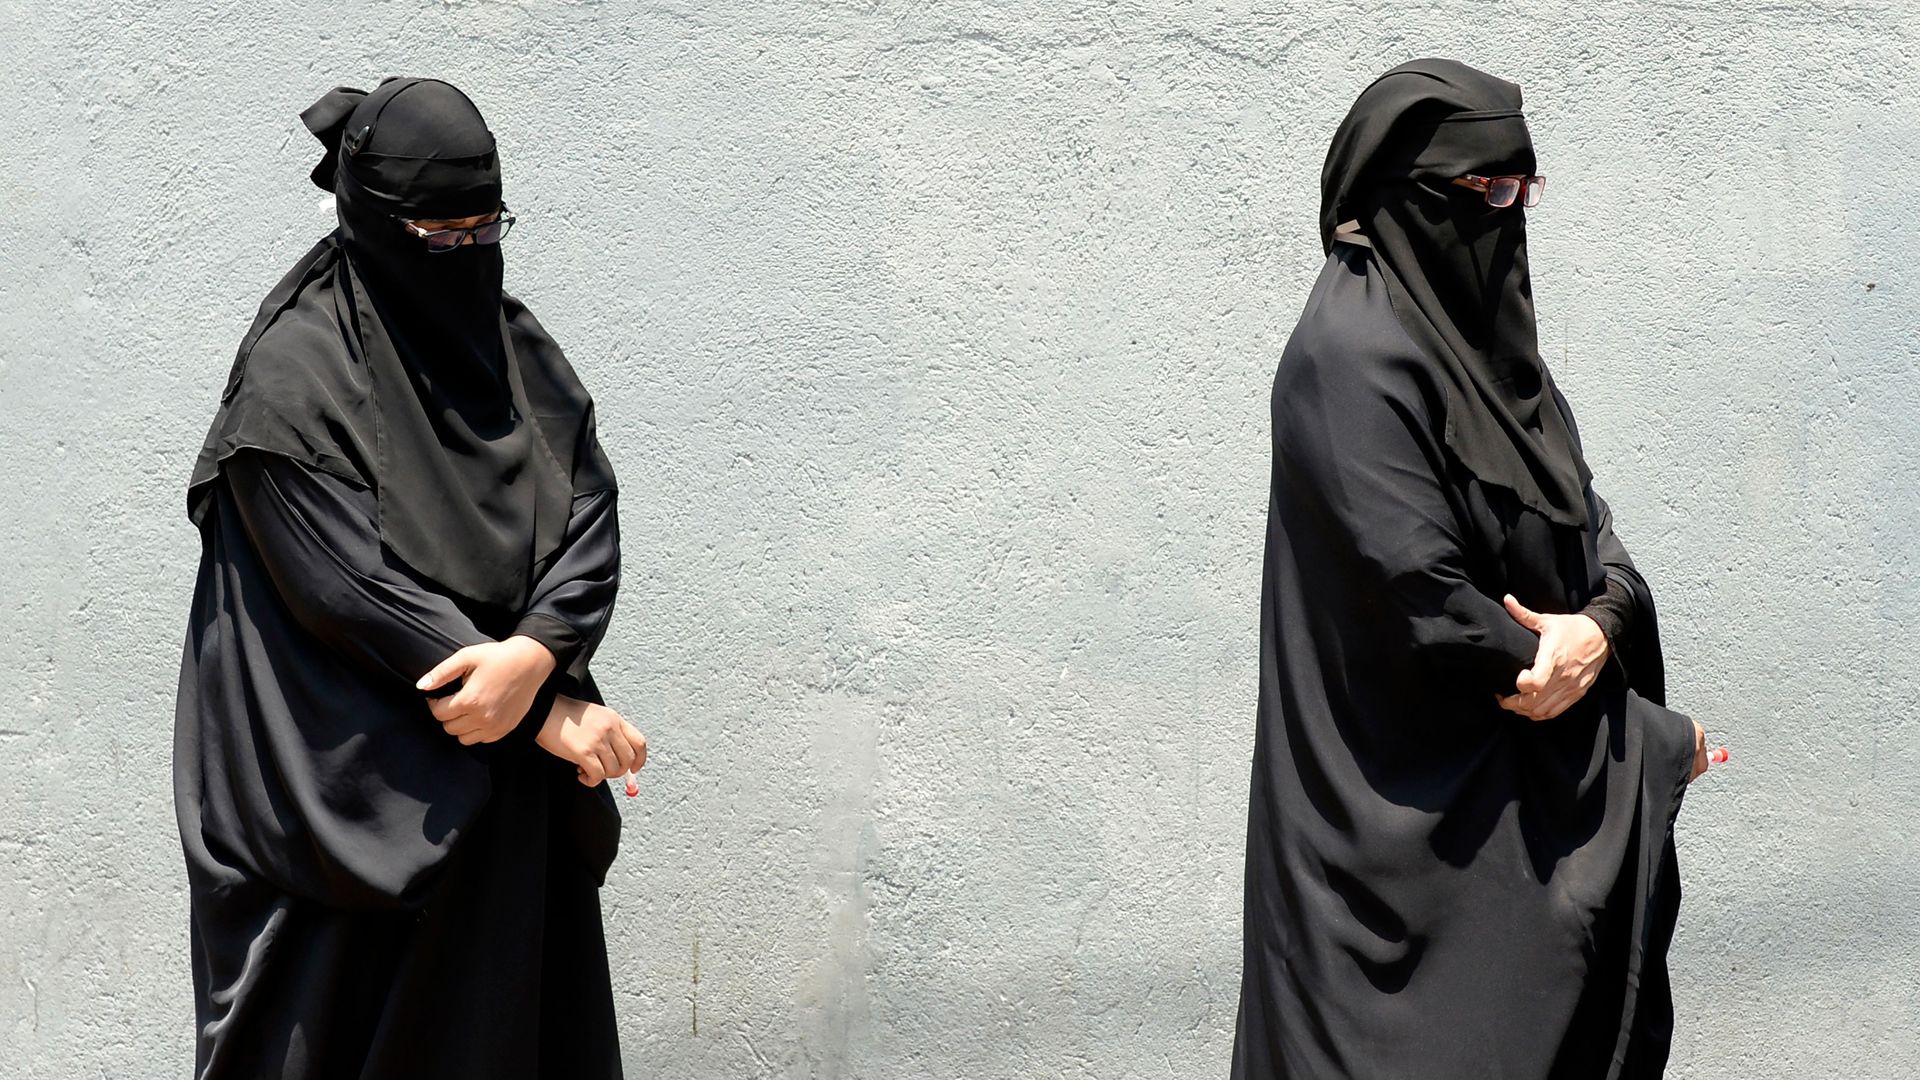 Picture of two women in Sri Lanka wearing burqas